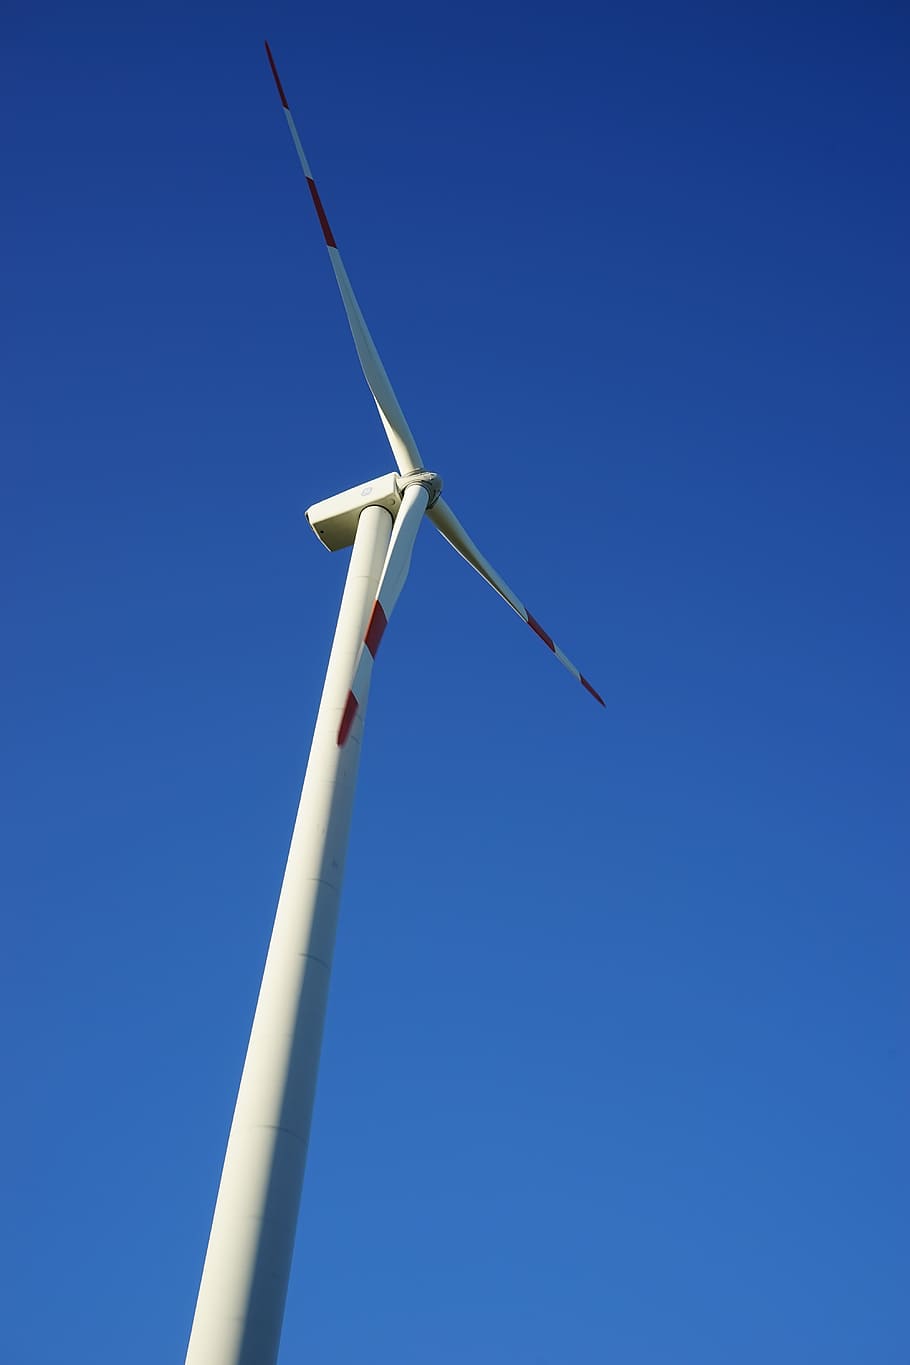 pinwheel, energy, wind power, energy revolution, wind energy, sky, environmental technology, environmental protection, current, power generation